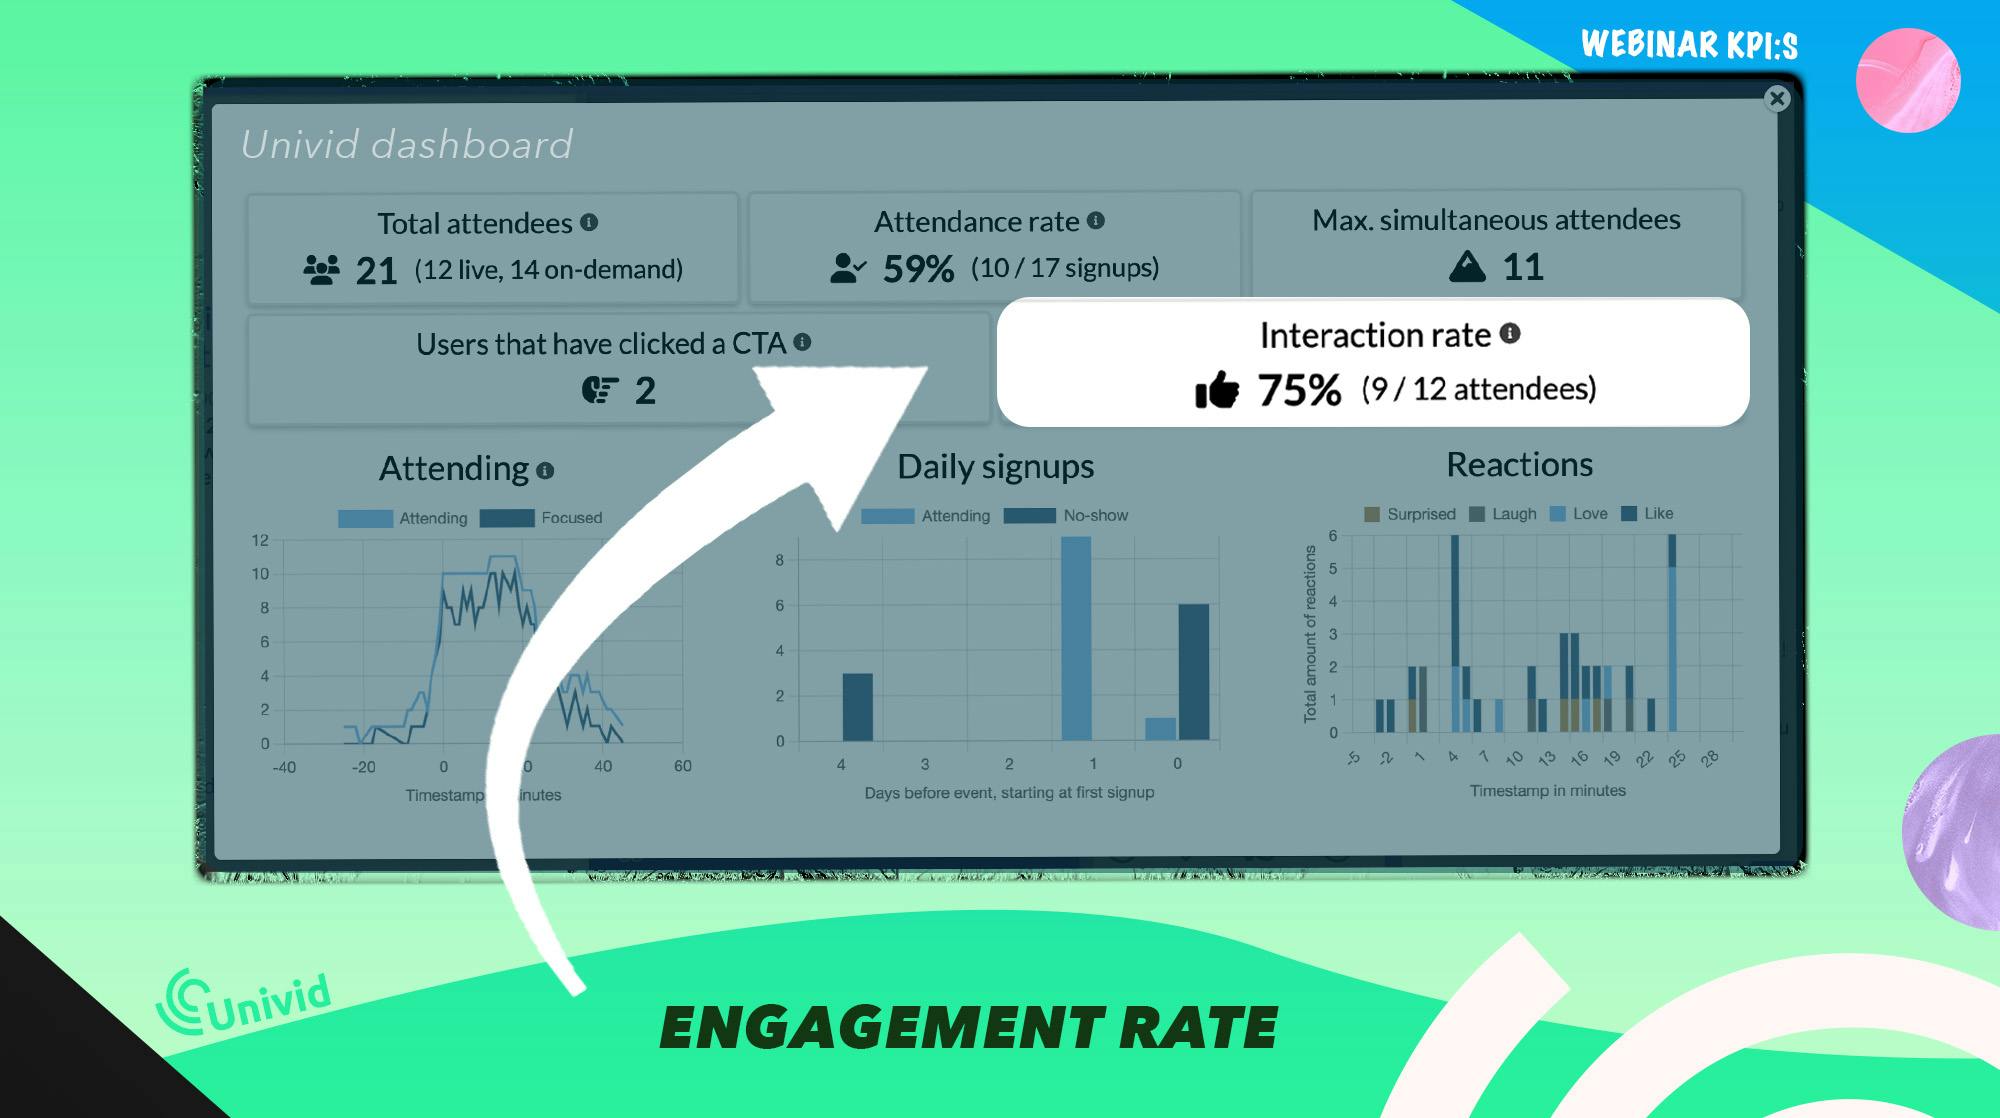 Engagement rate of event - Webinar KPI:s